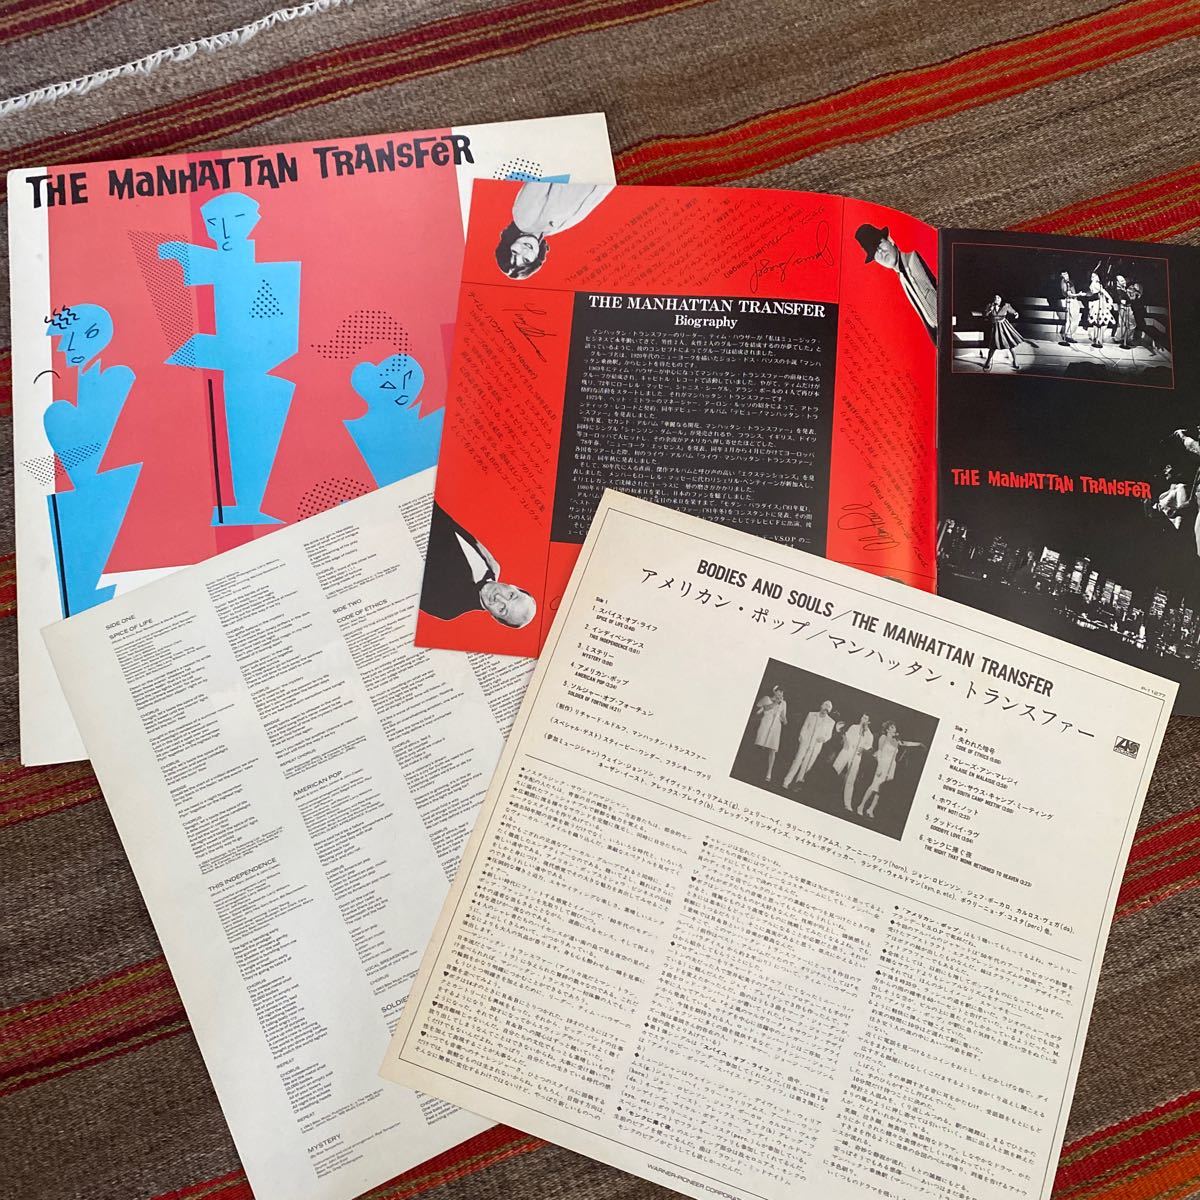 Manhattan Transferの Bodies and soulsとVocalese レコード2枚組。価値を見いだす方へ。